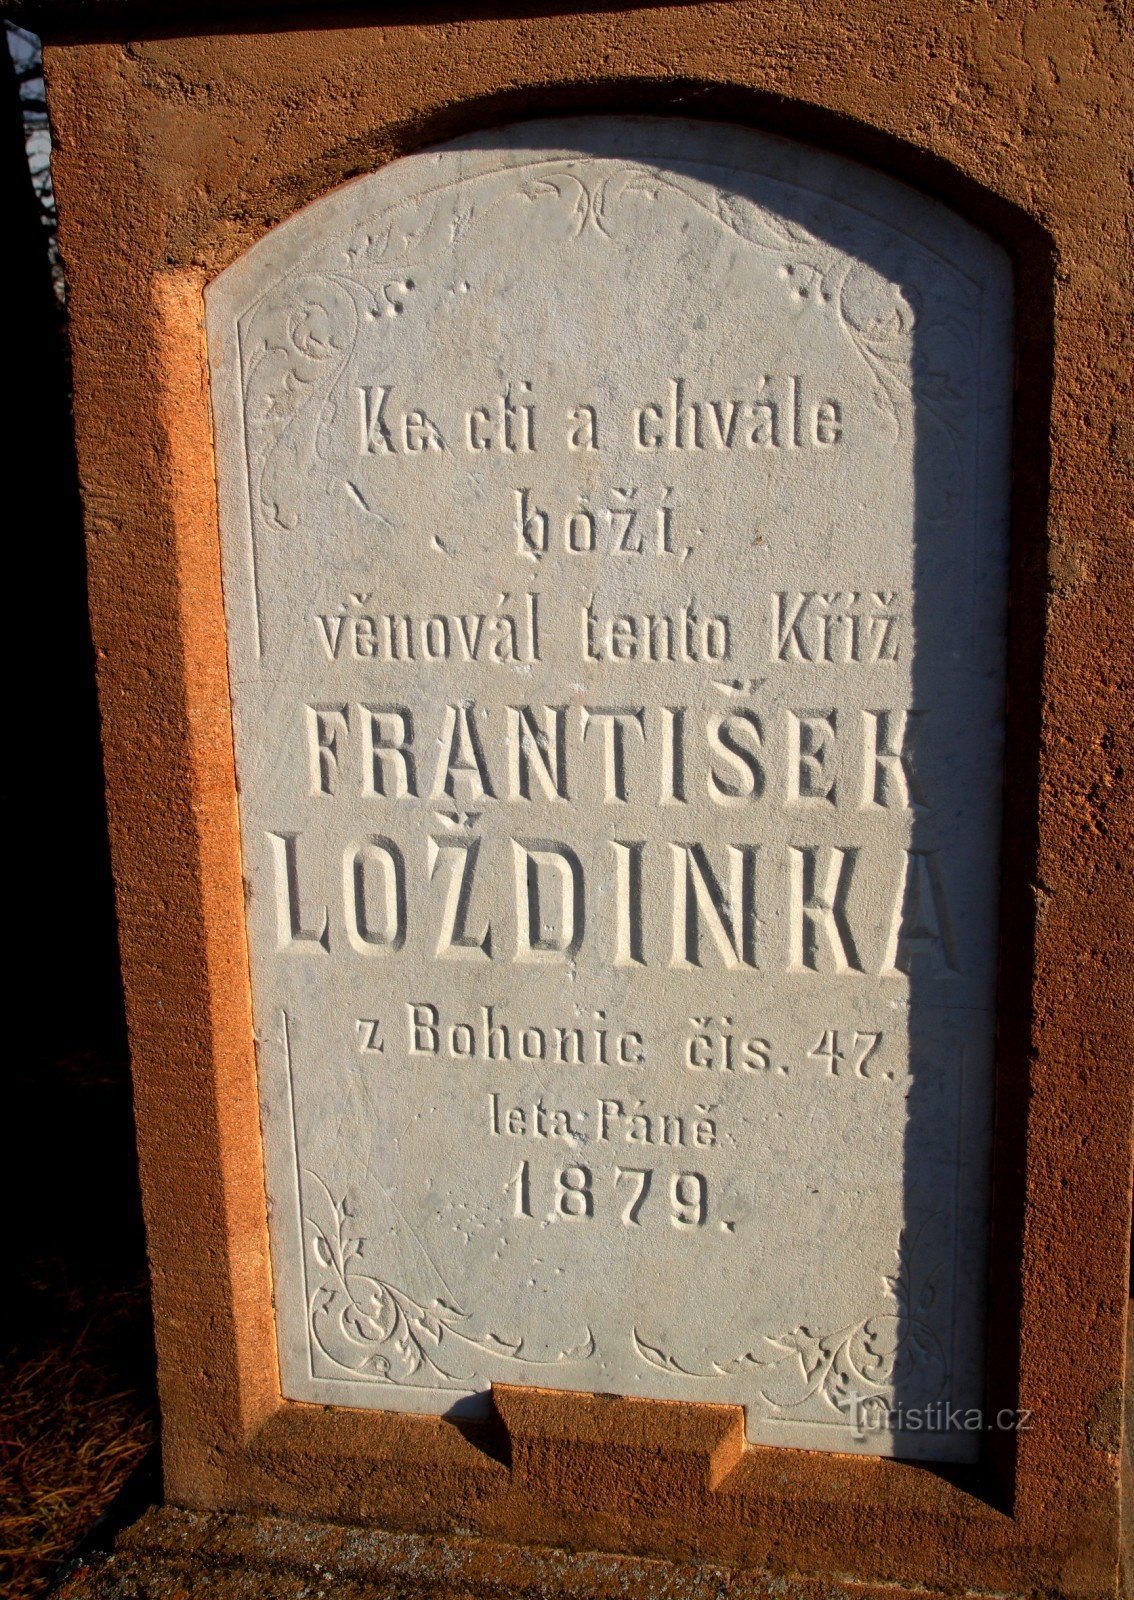 Brno-Bohunice - Thánh giá của Loždink